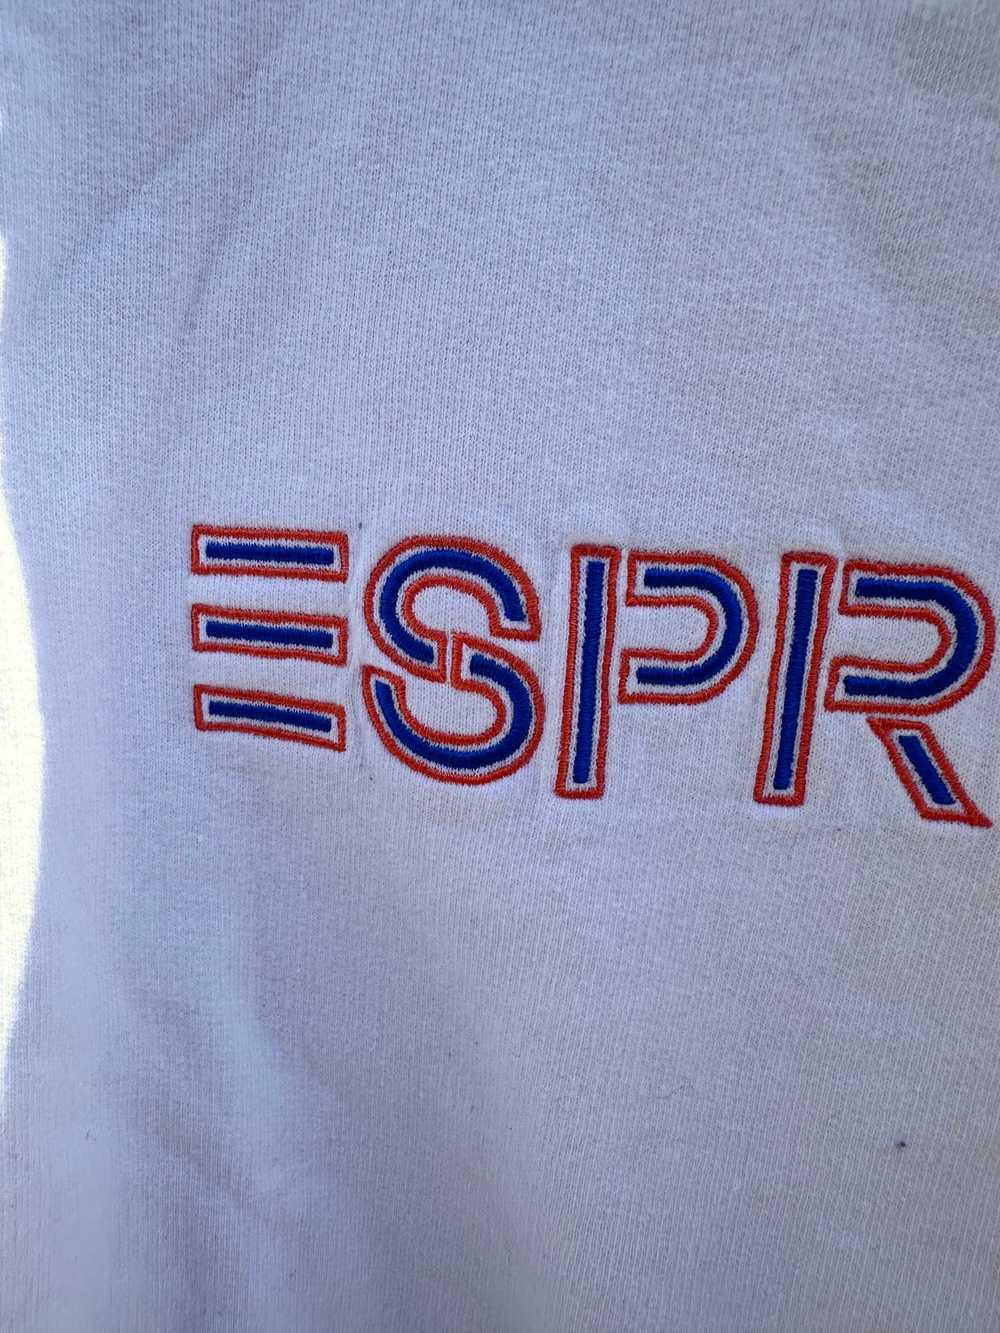 1980's Embroidered ESPRIT Sweatshirt - image 2